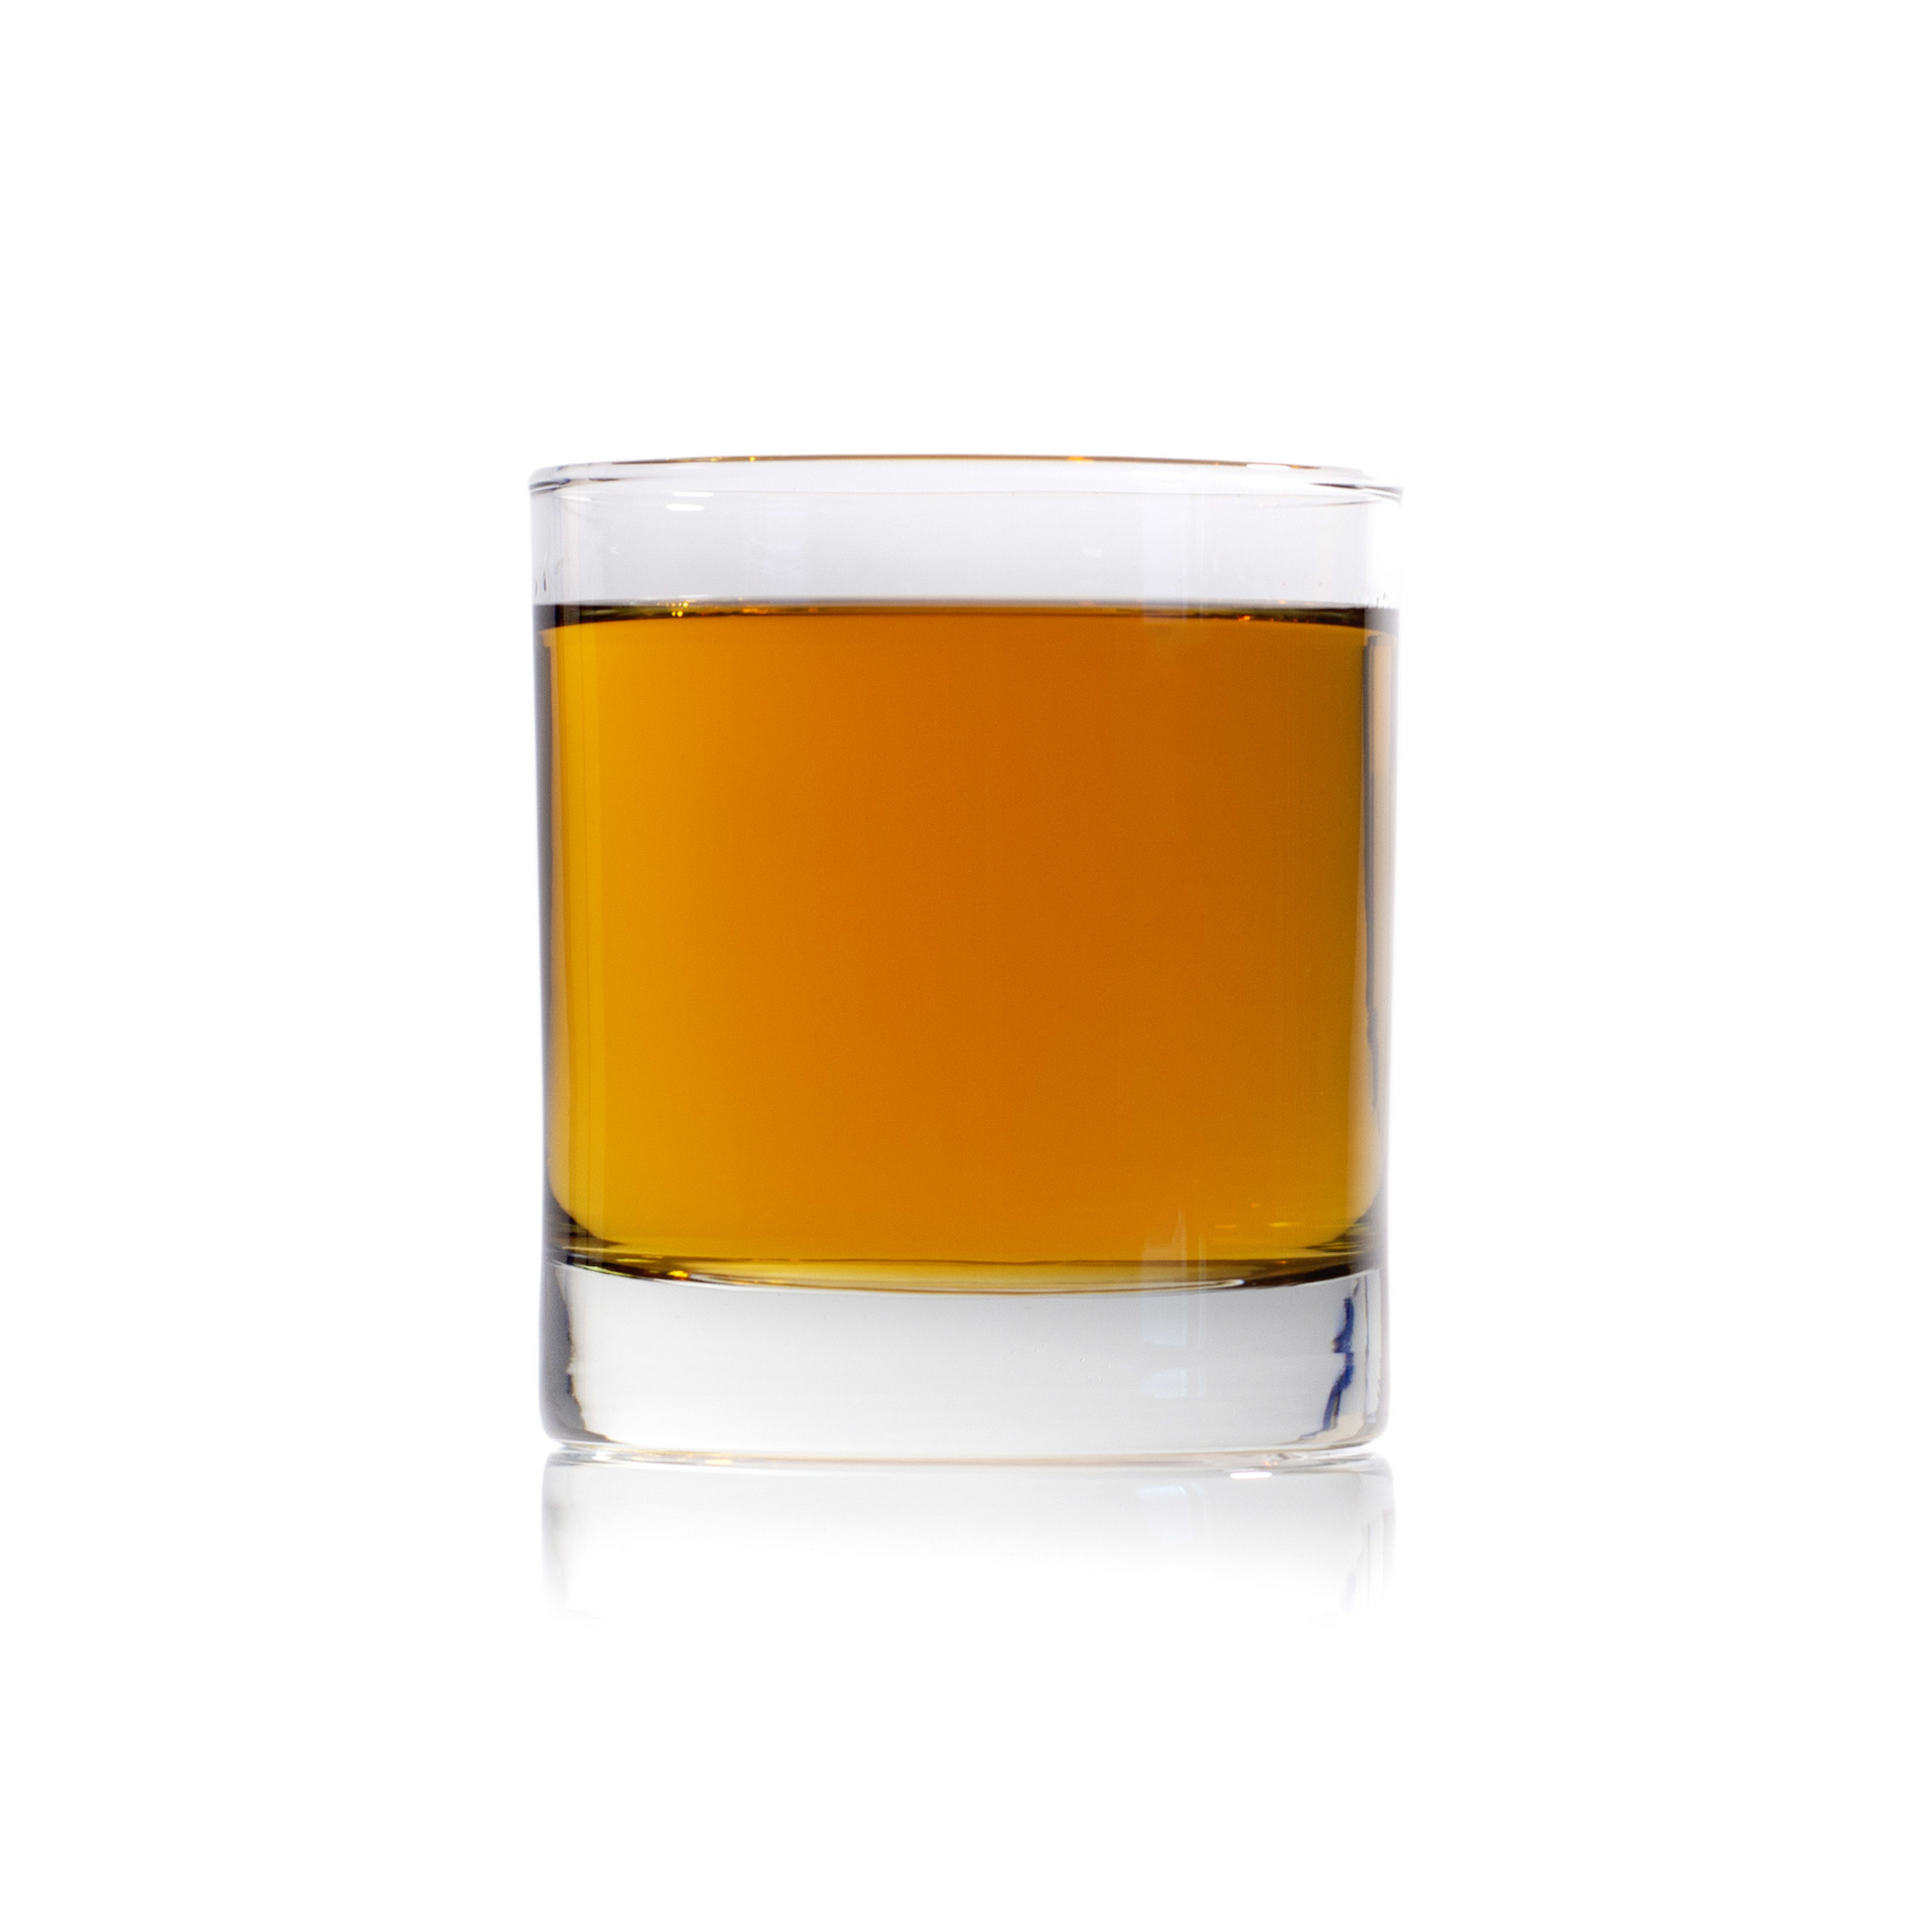 Personalized 10 oz Whiskey Glass